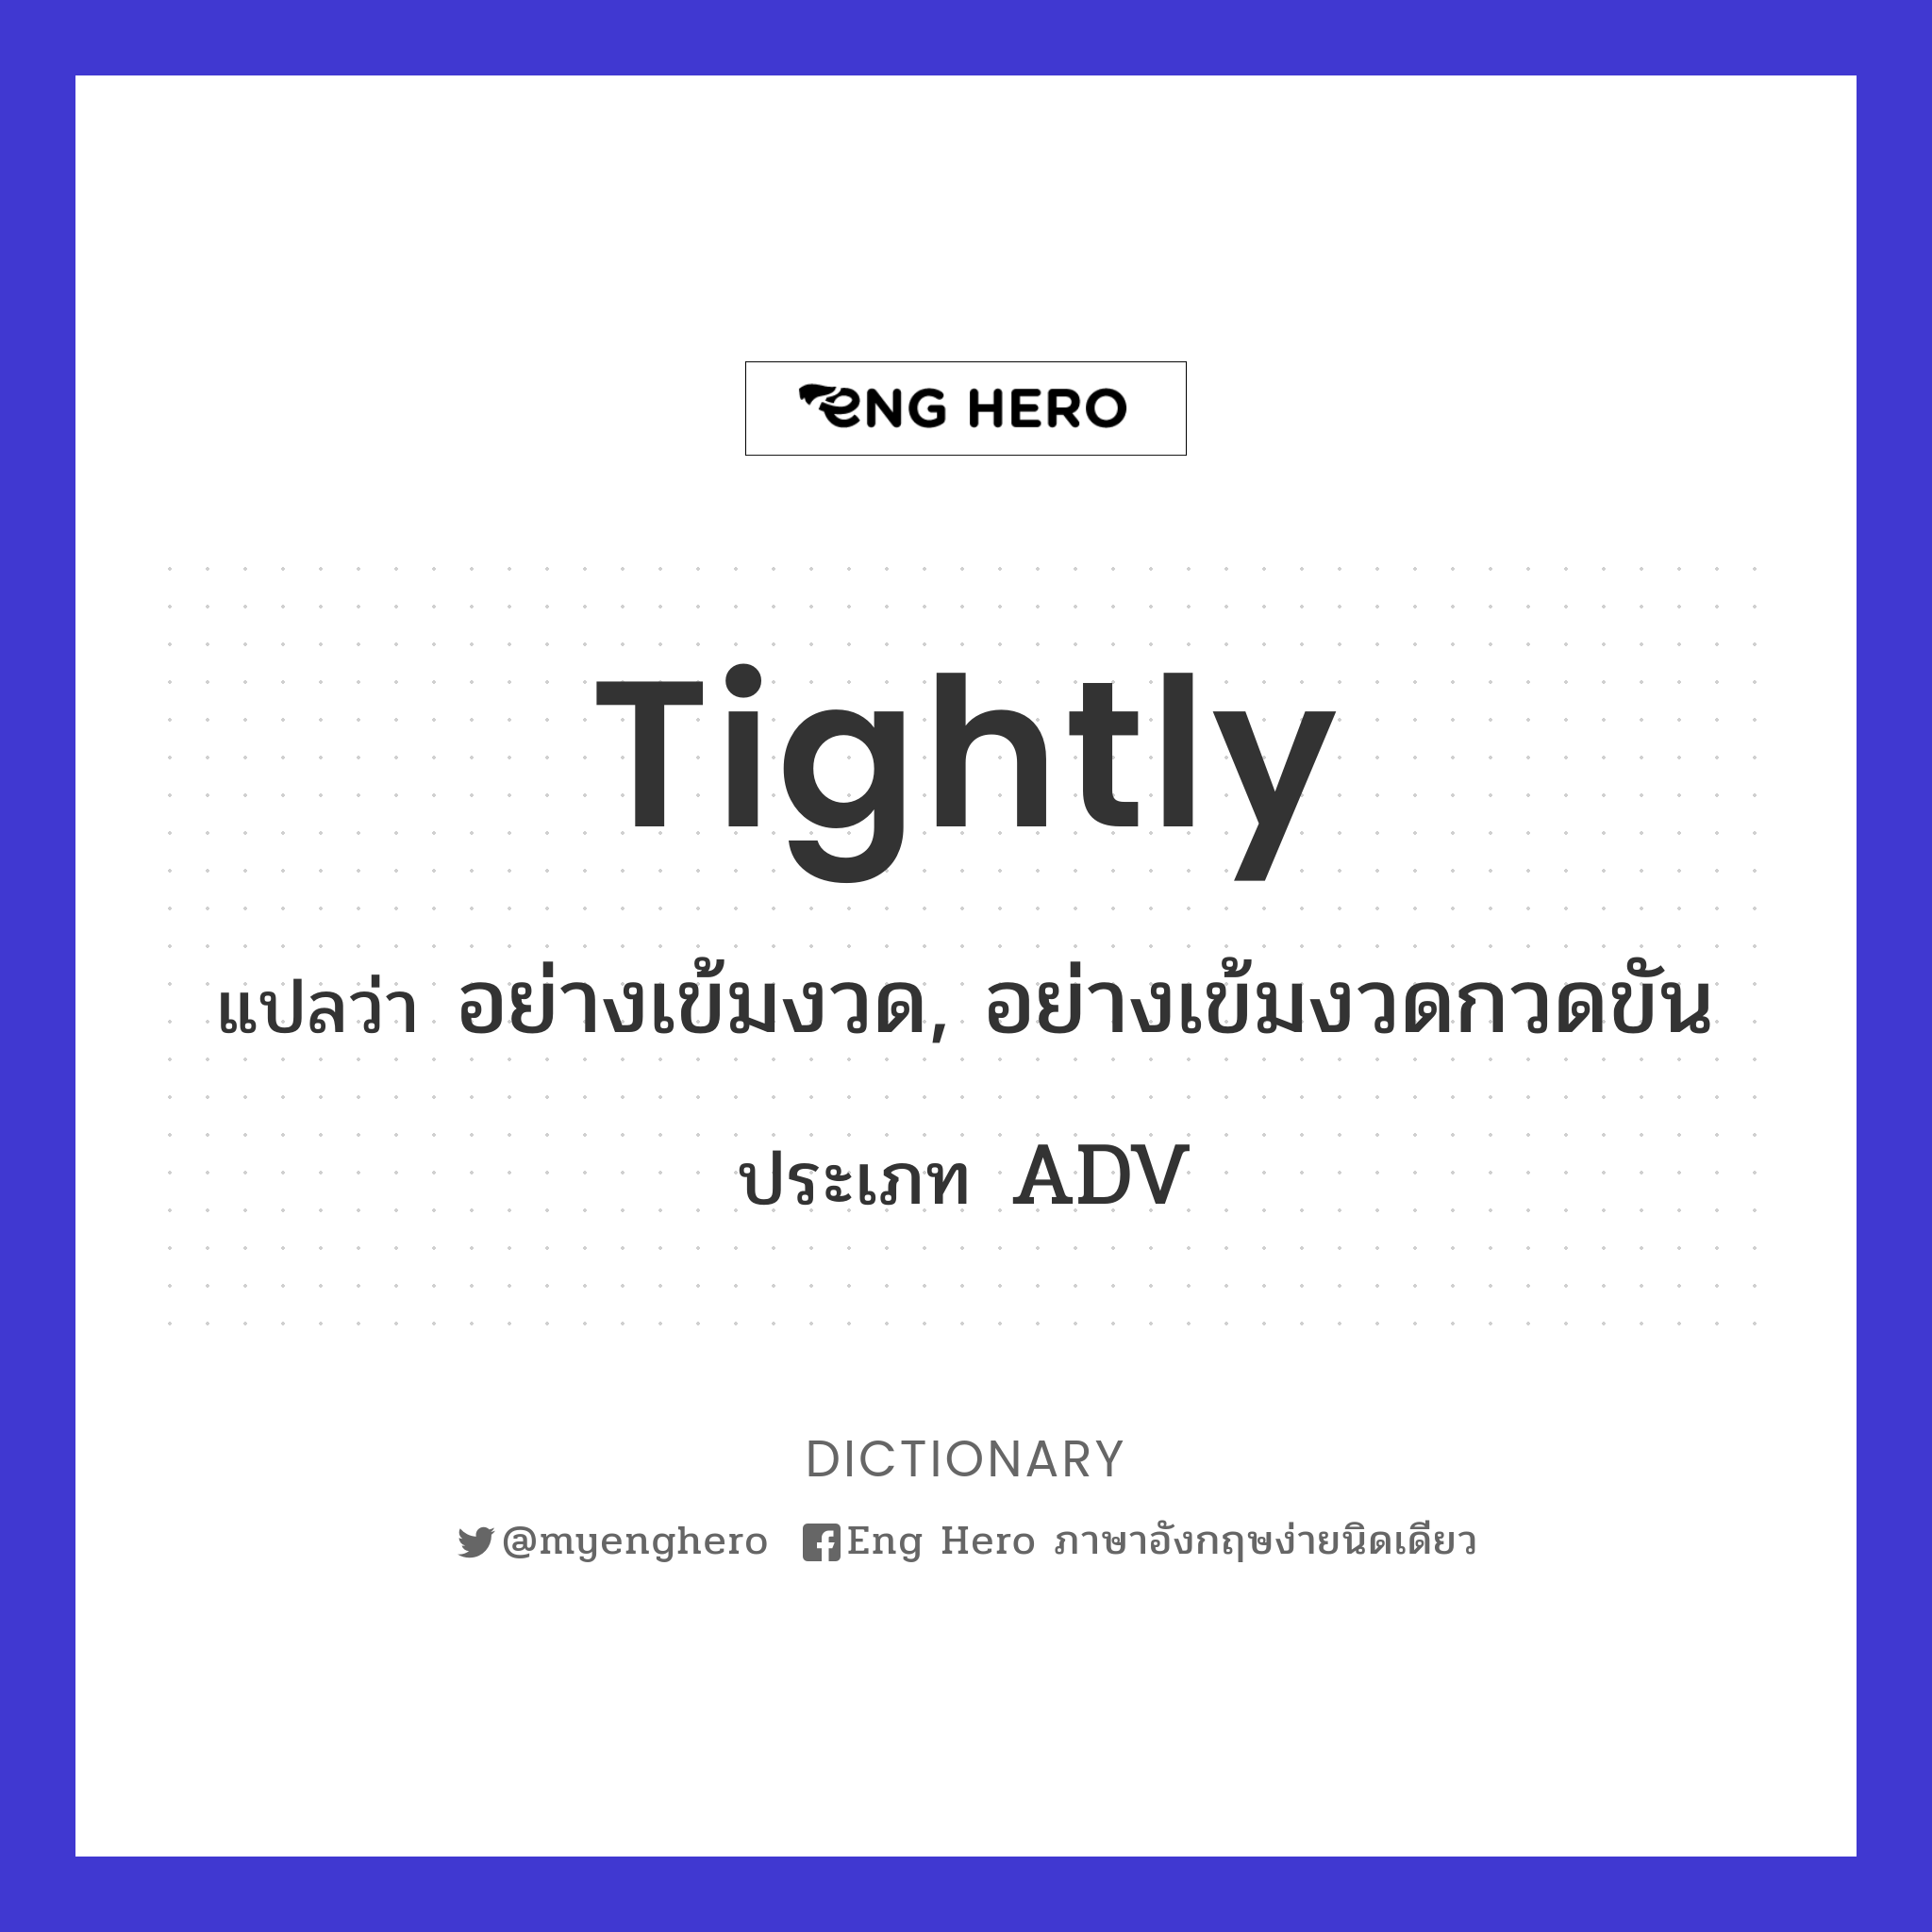 tightly